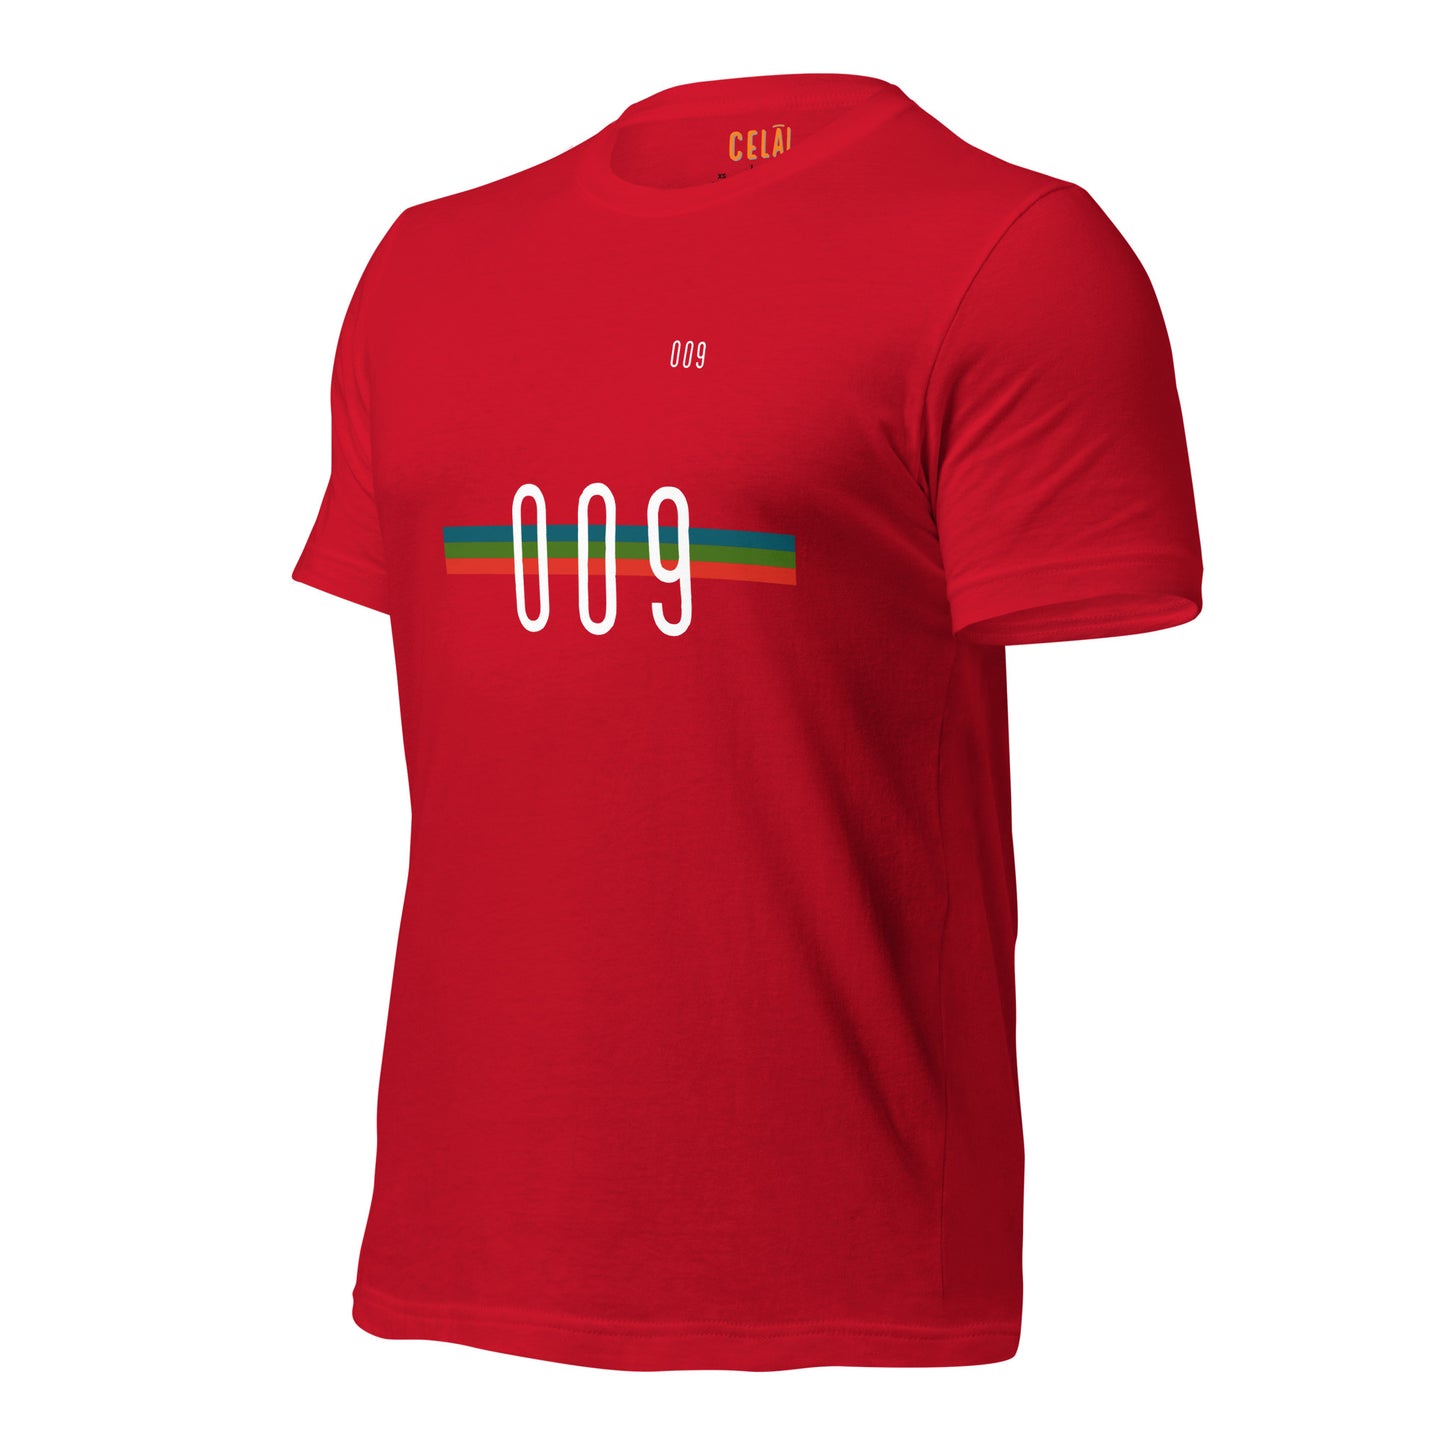 009 Unisex t-shirt